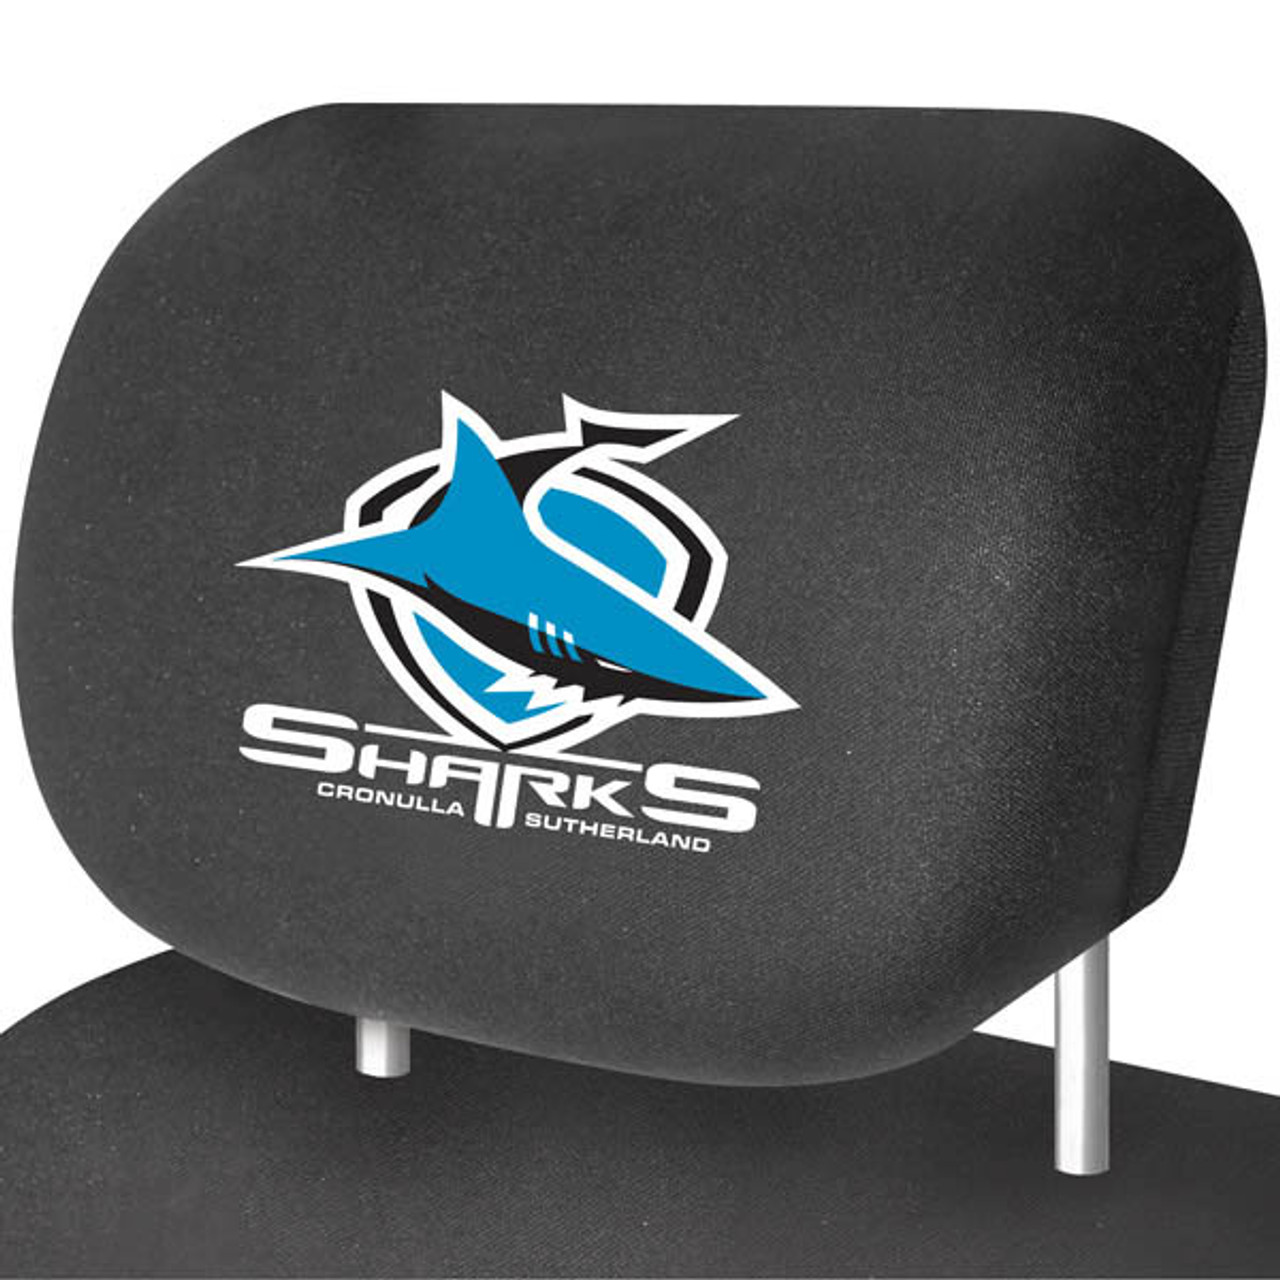 Cronulla Sharks NRL Headrests